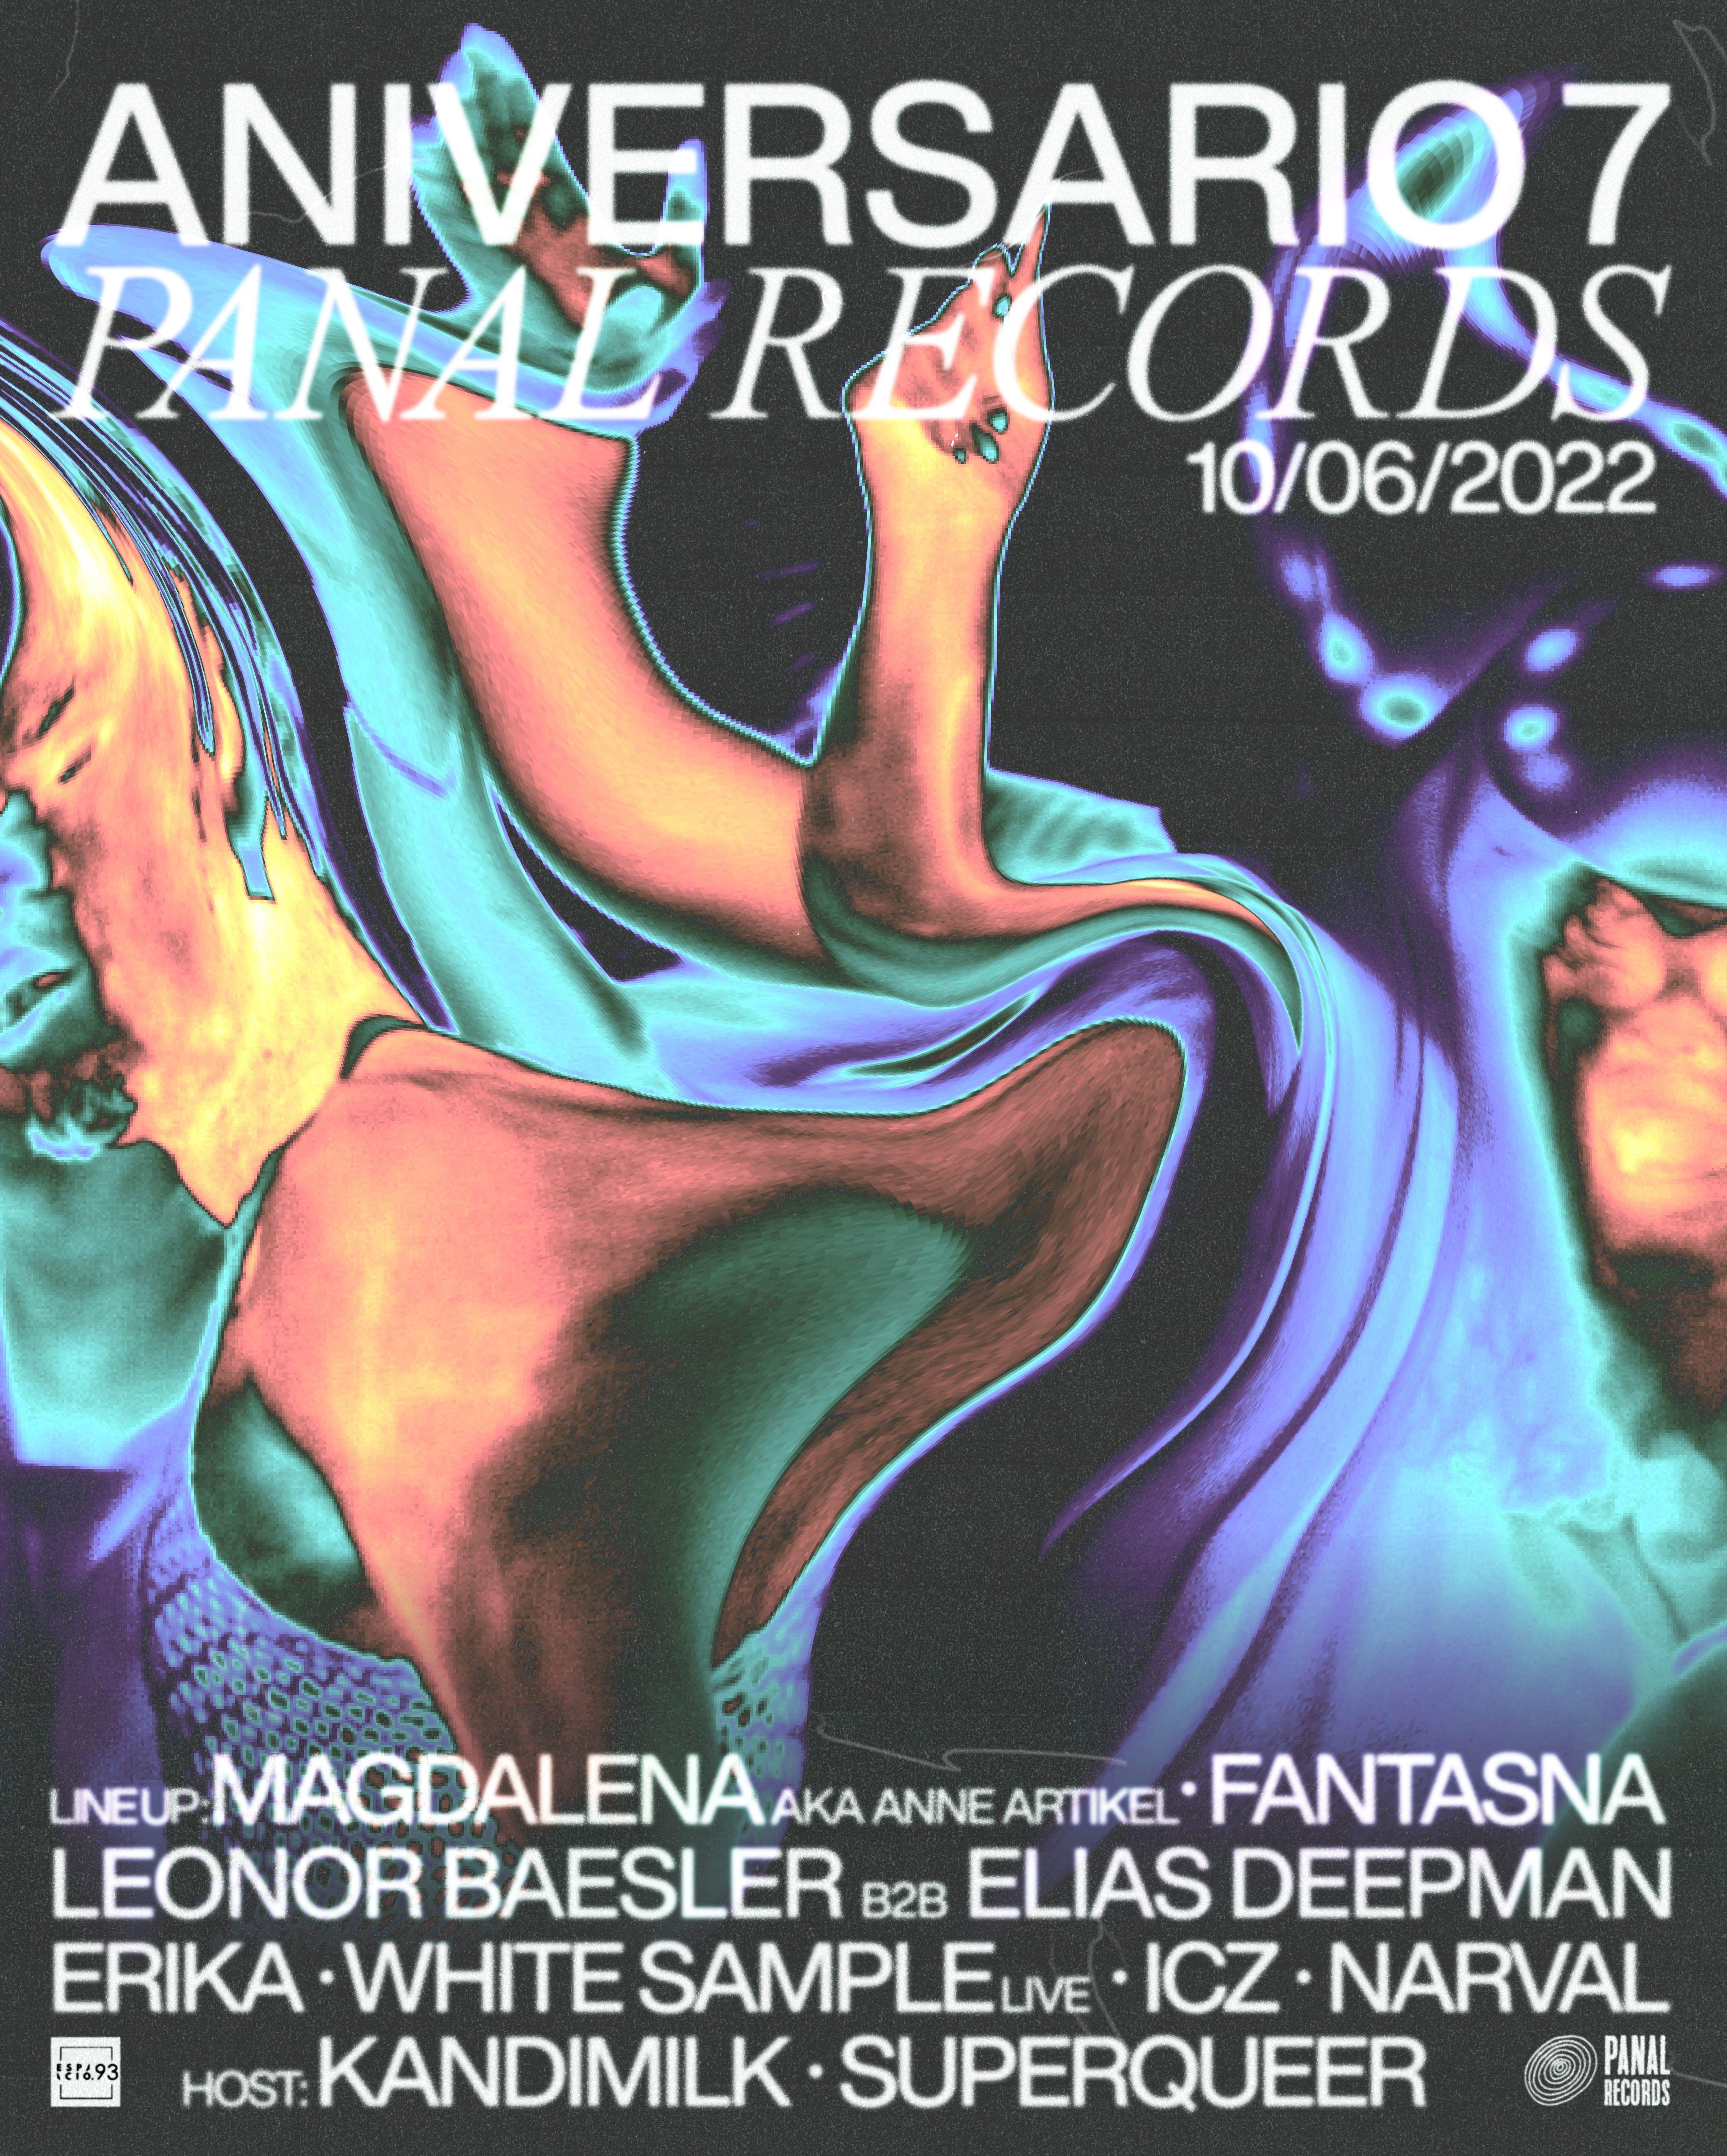 Magdalena (Col) x Panal Records / 7 Aniversario - フライヤー裏